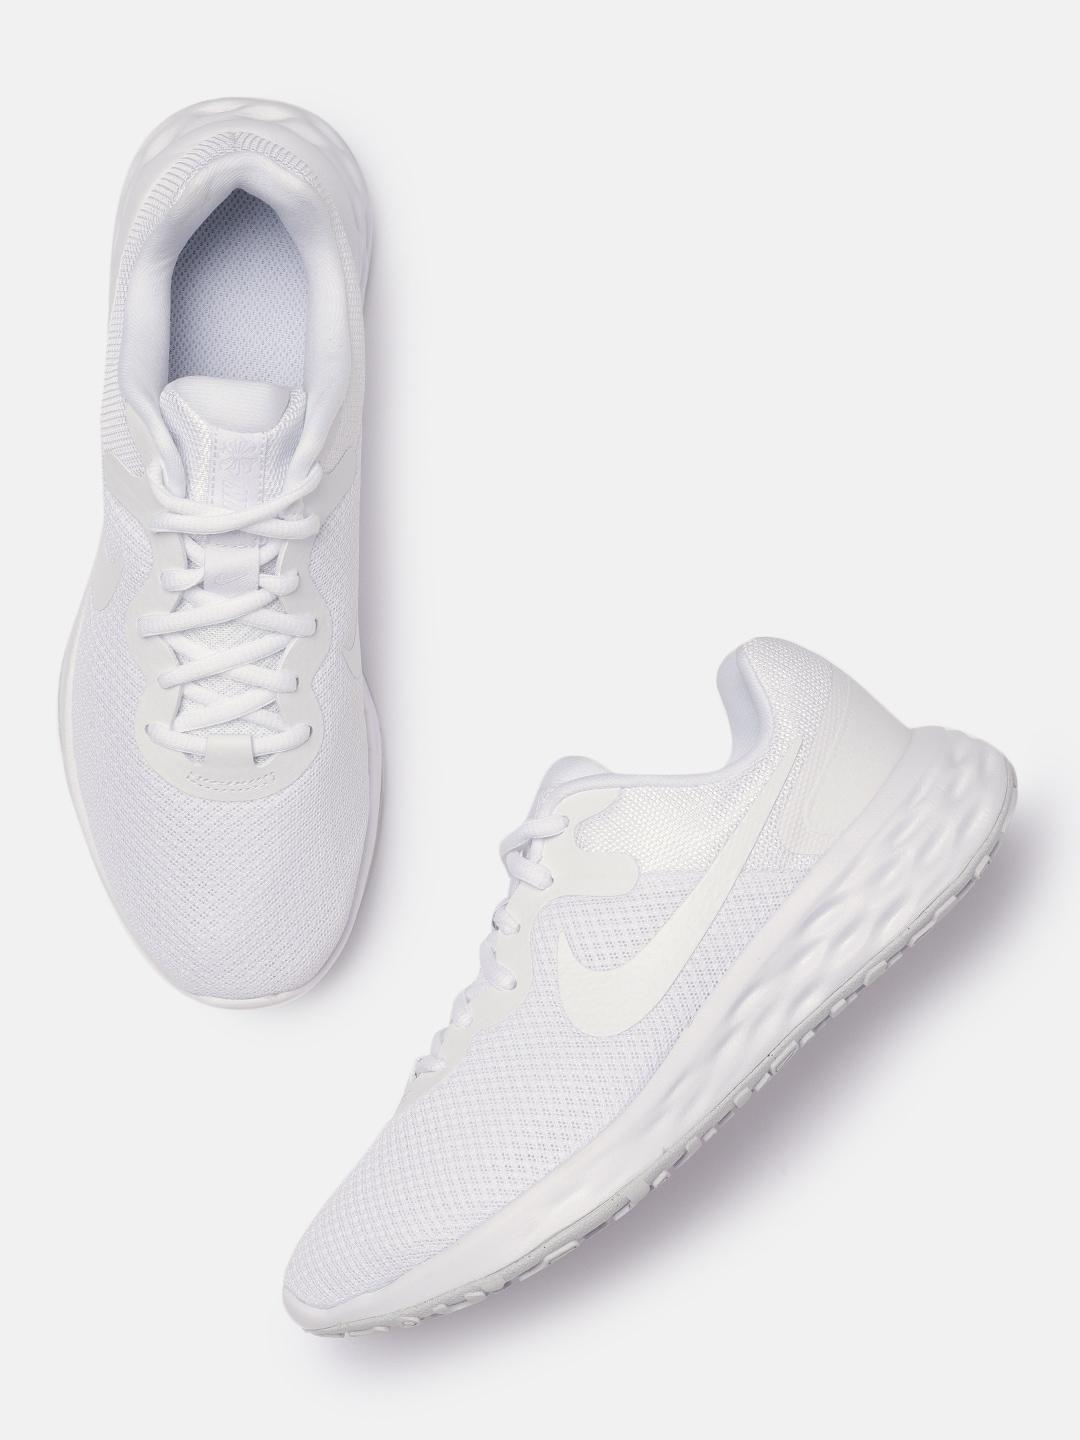 Nike Women White Textile Running Shoes